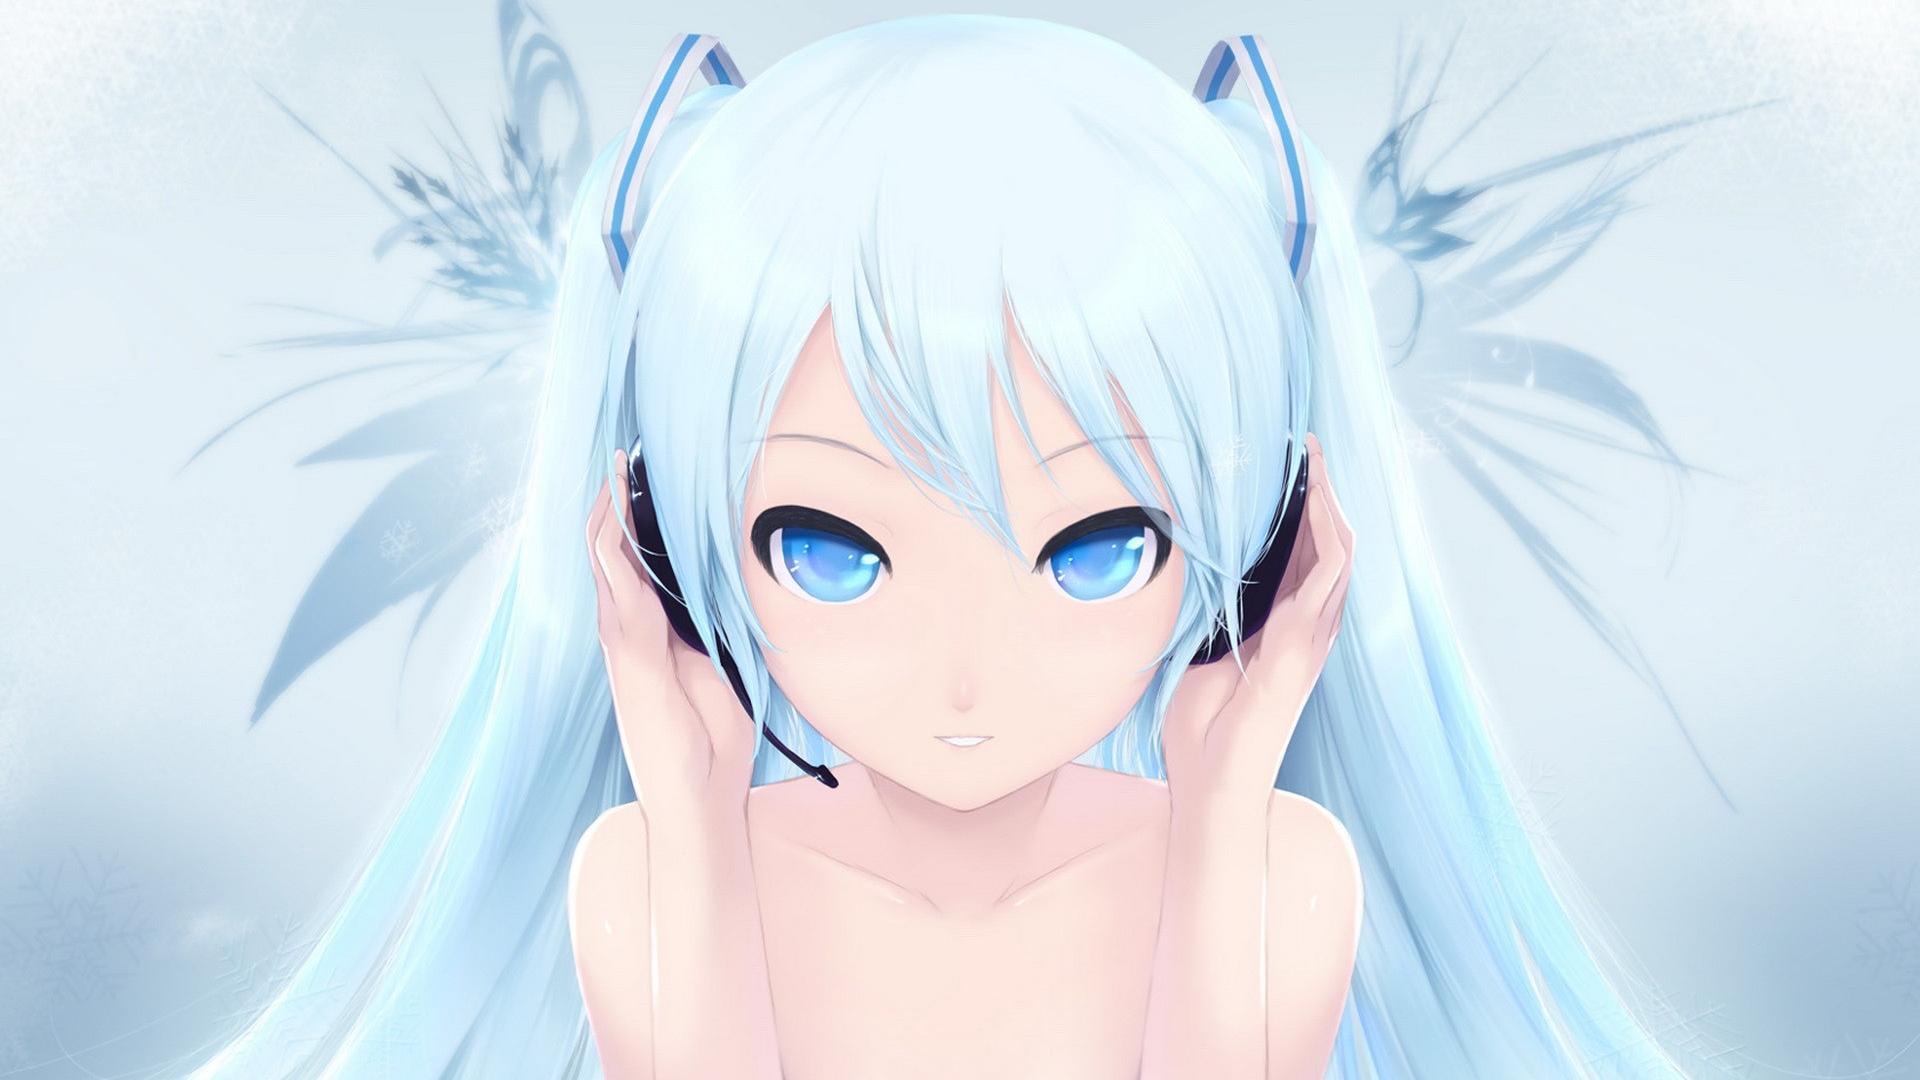 Anime Girl With Headphones Hd Wallpaper